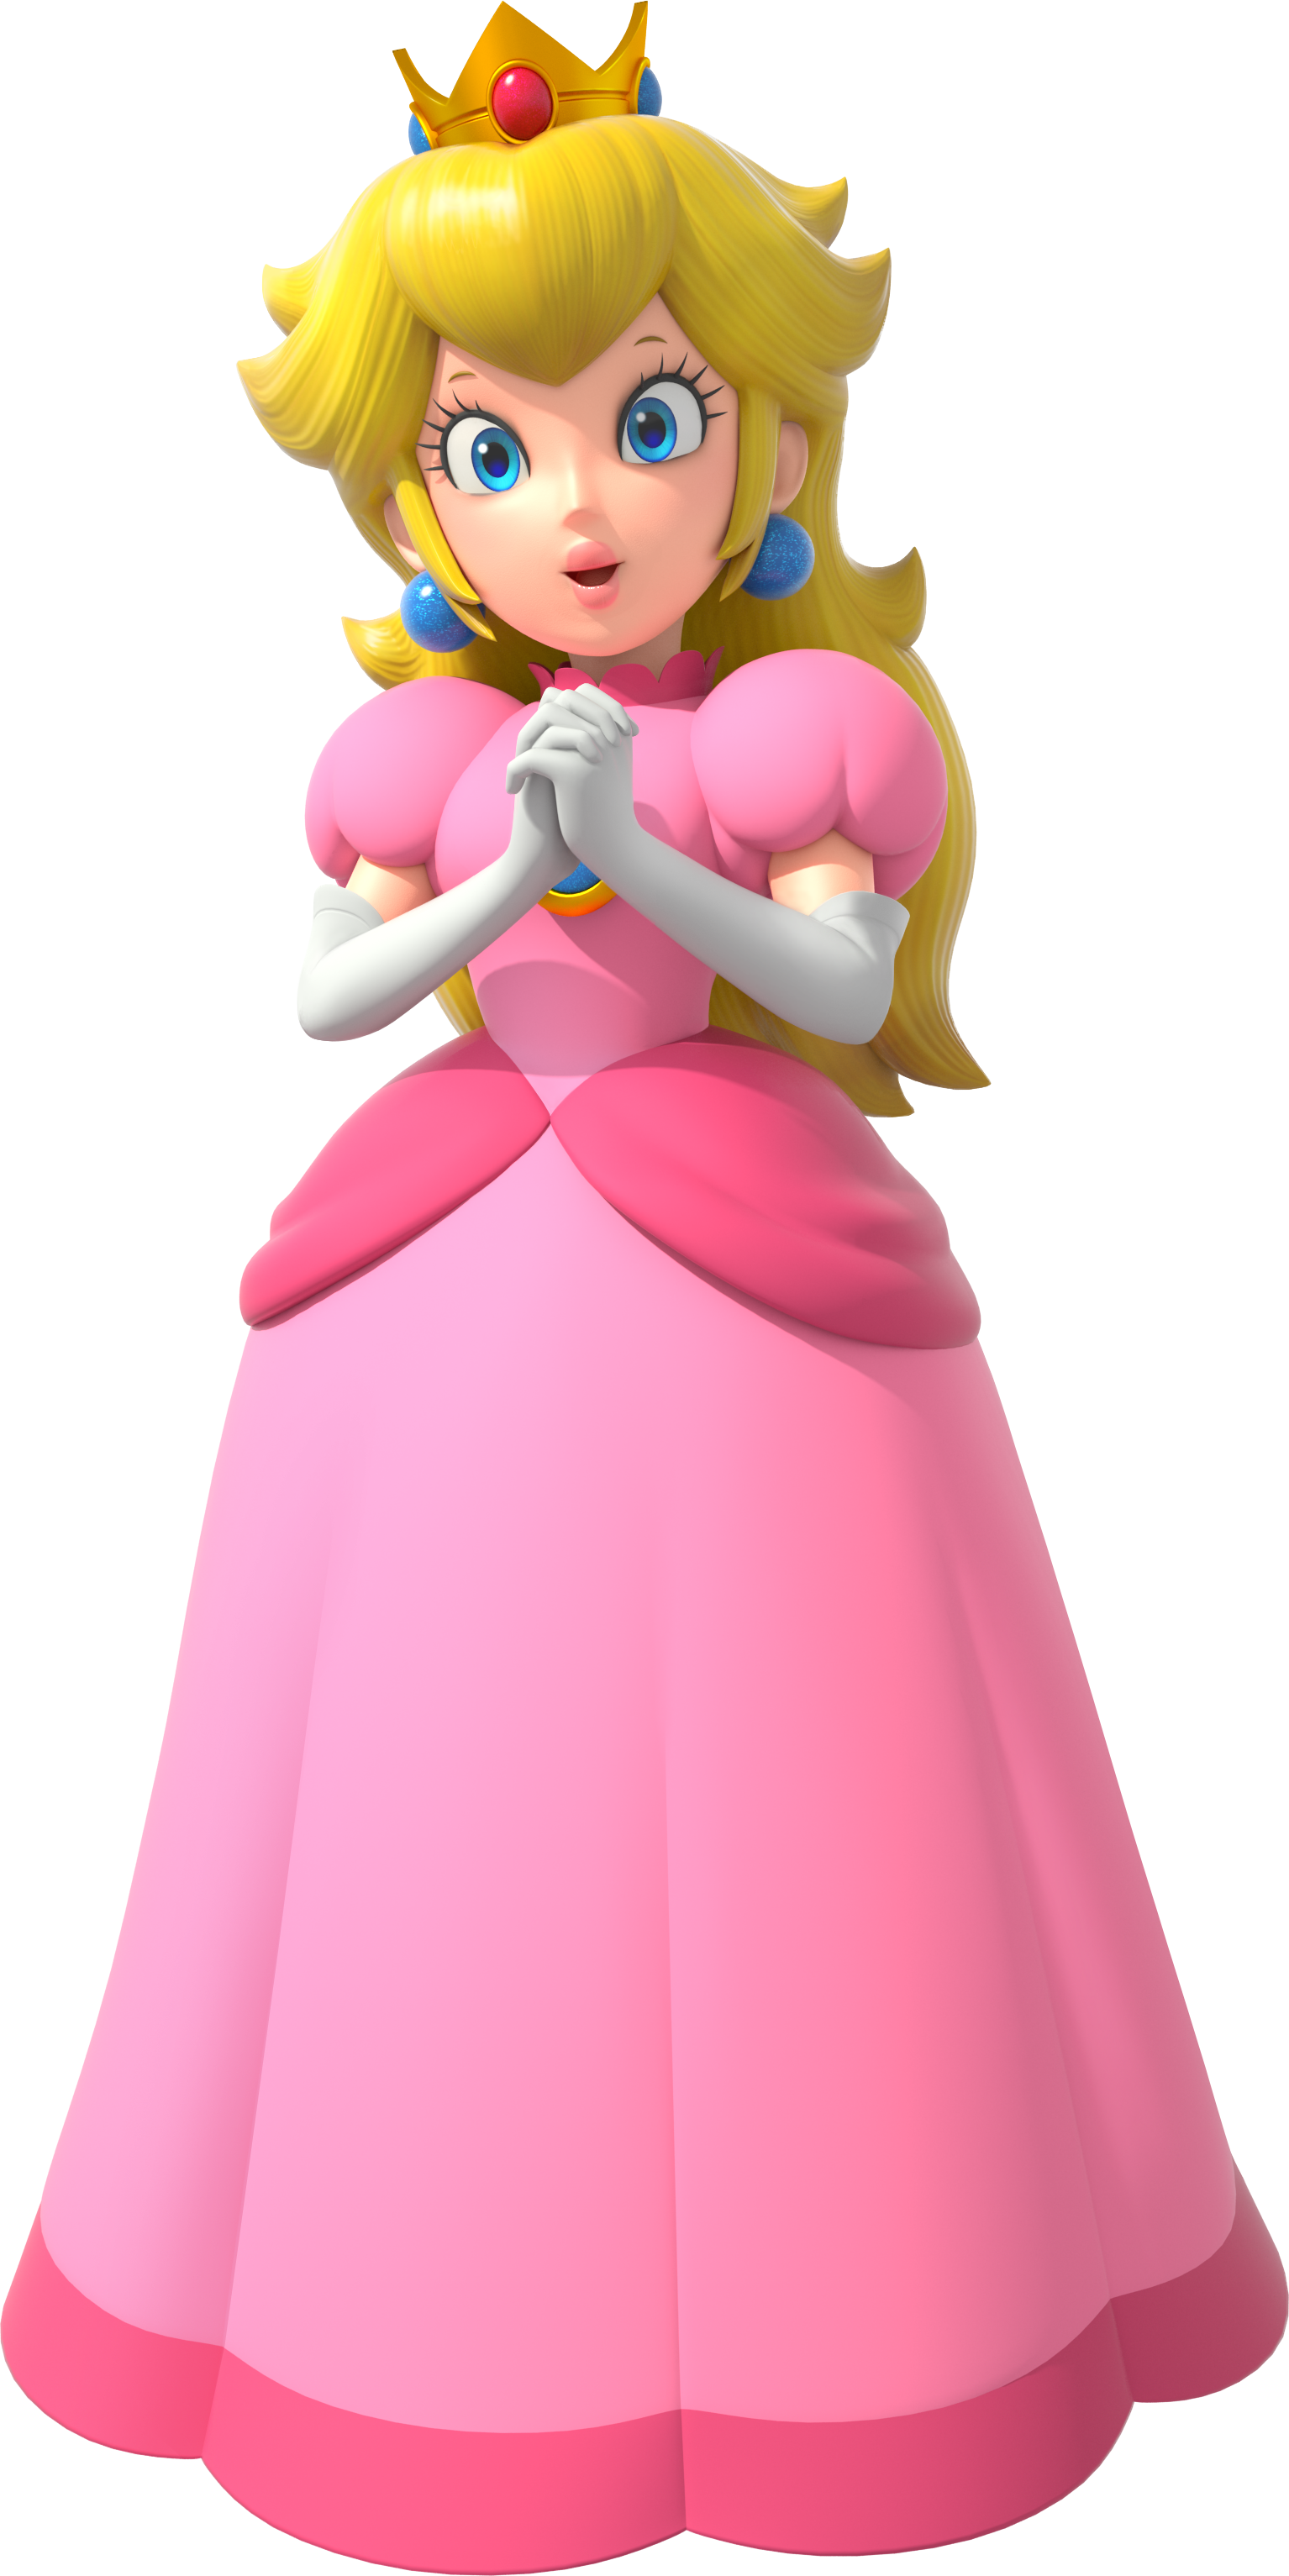 Download Princess Peach | MarioWiki | FANDOM powered by Wikia